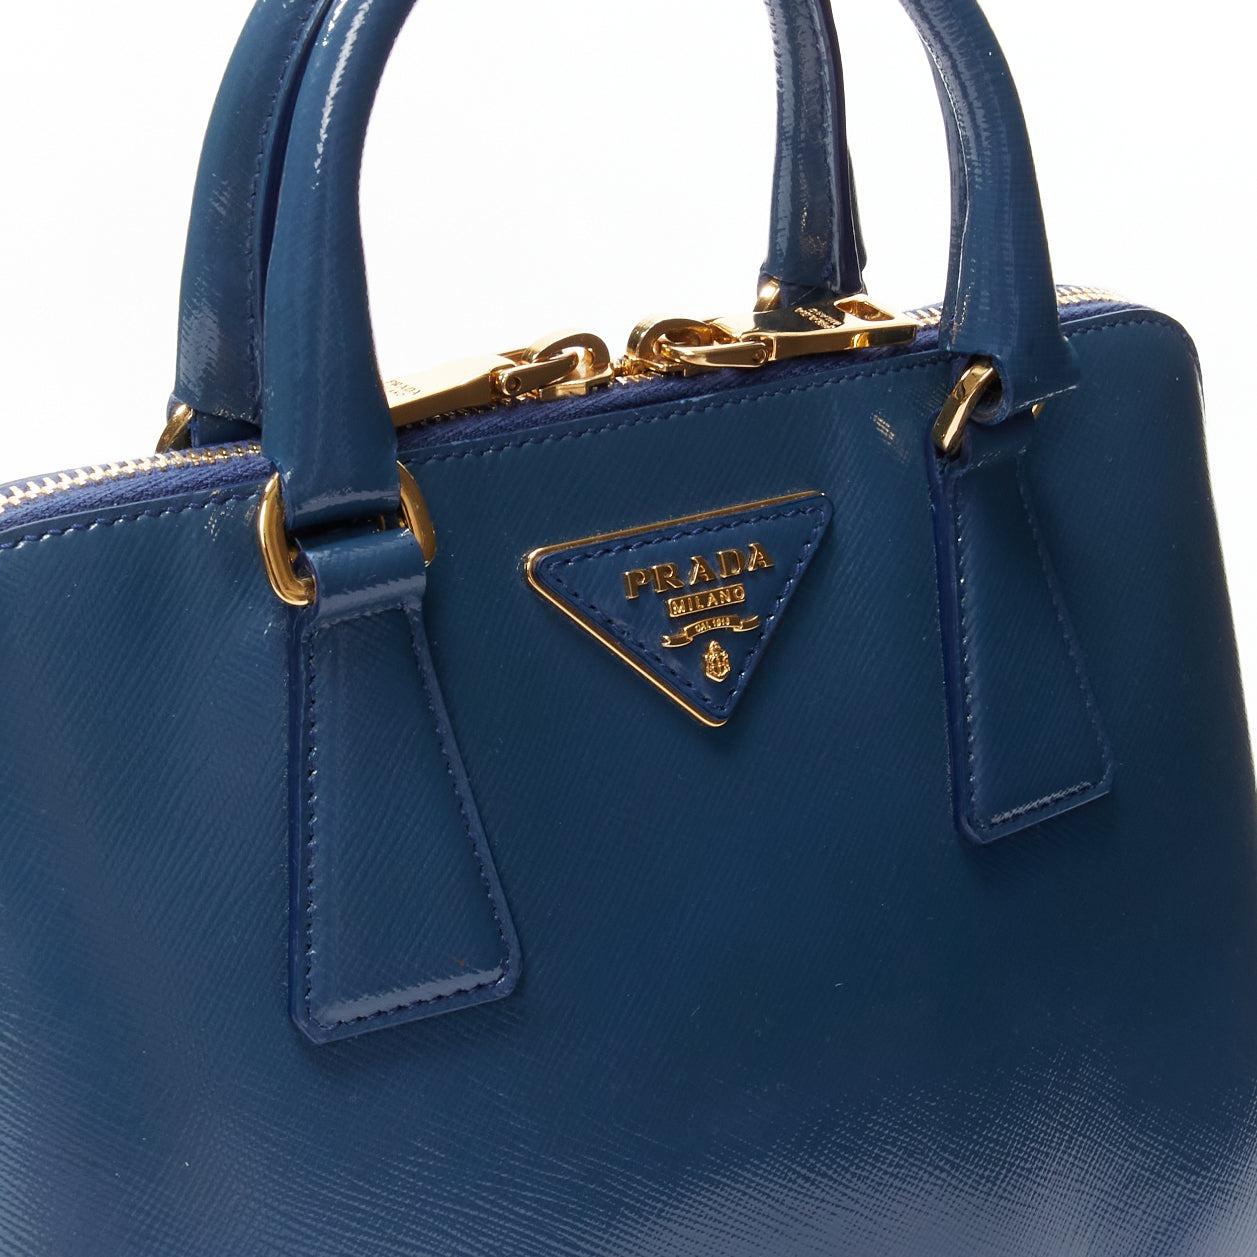 PRADA Promenade Vernice Saffiano blue leather triangle logo top handle tote bag For Sale 2